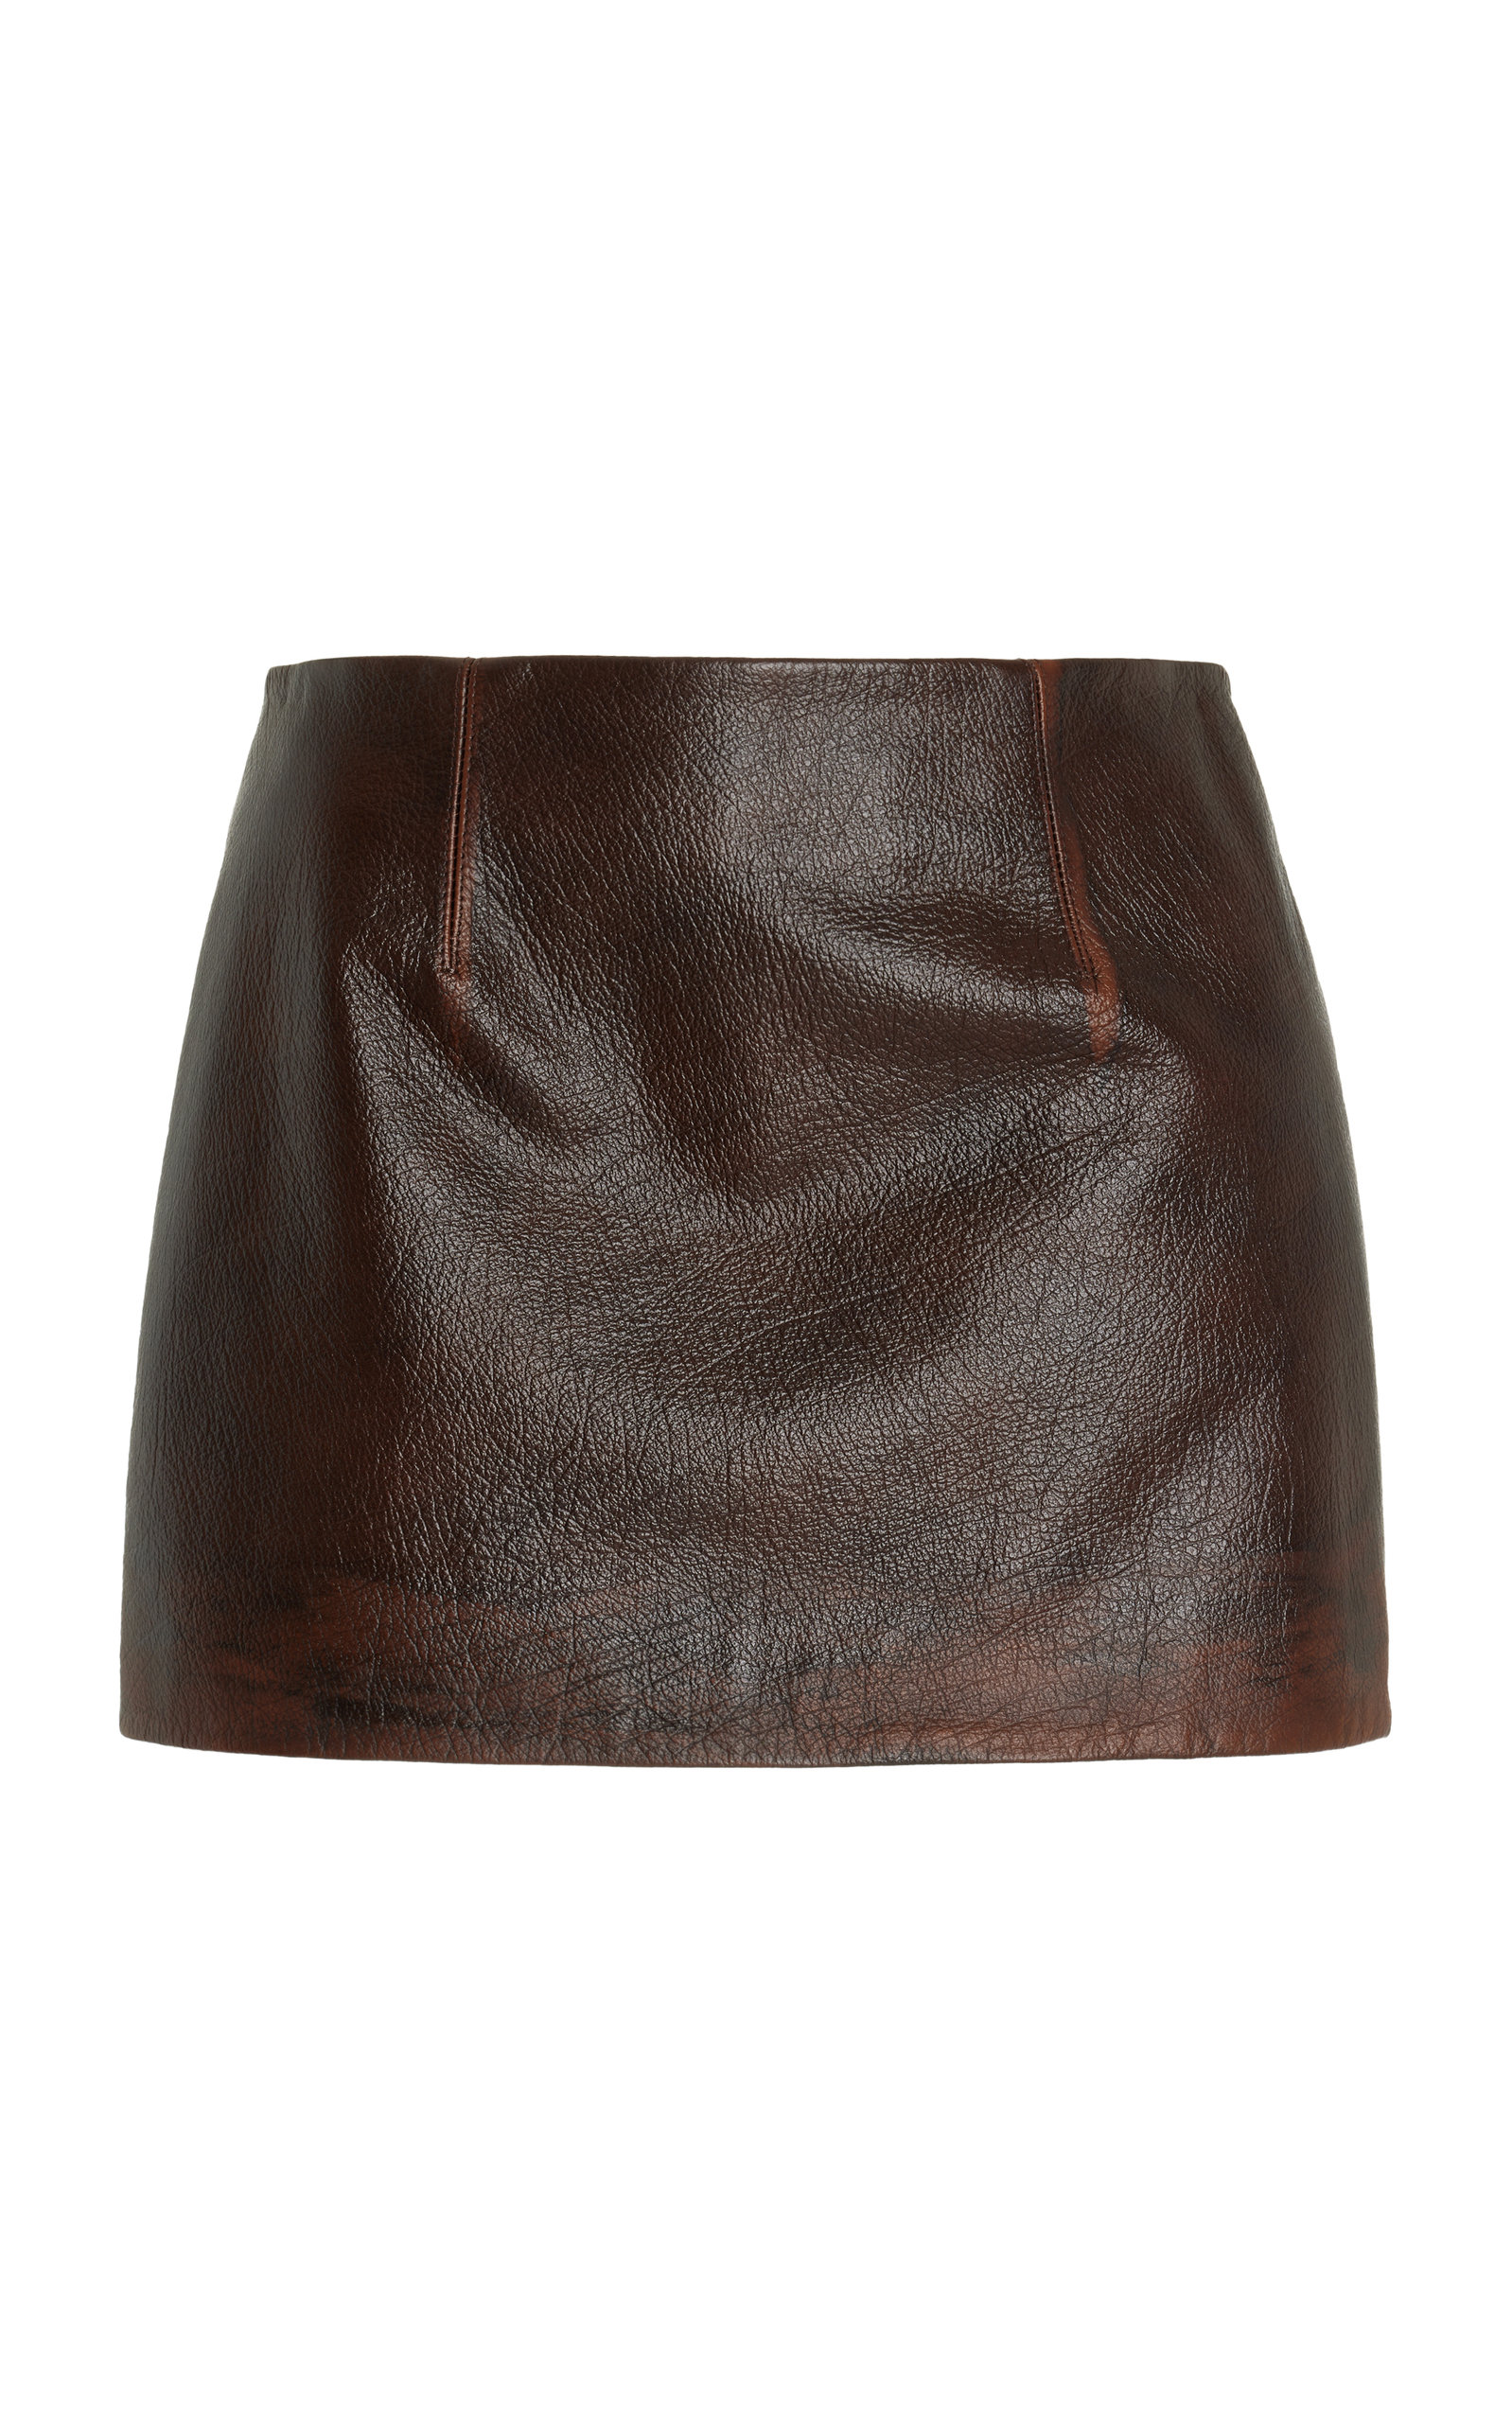 16Arlington Women's Haile Leather Mini Skirt